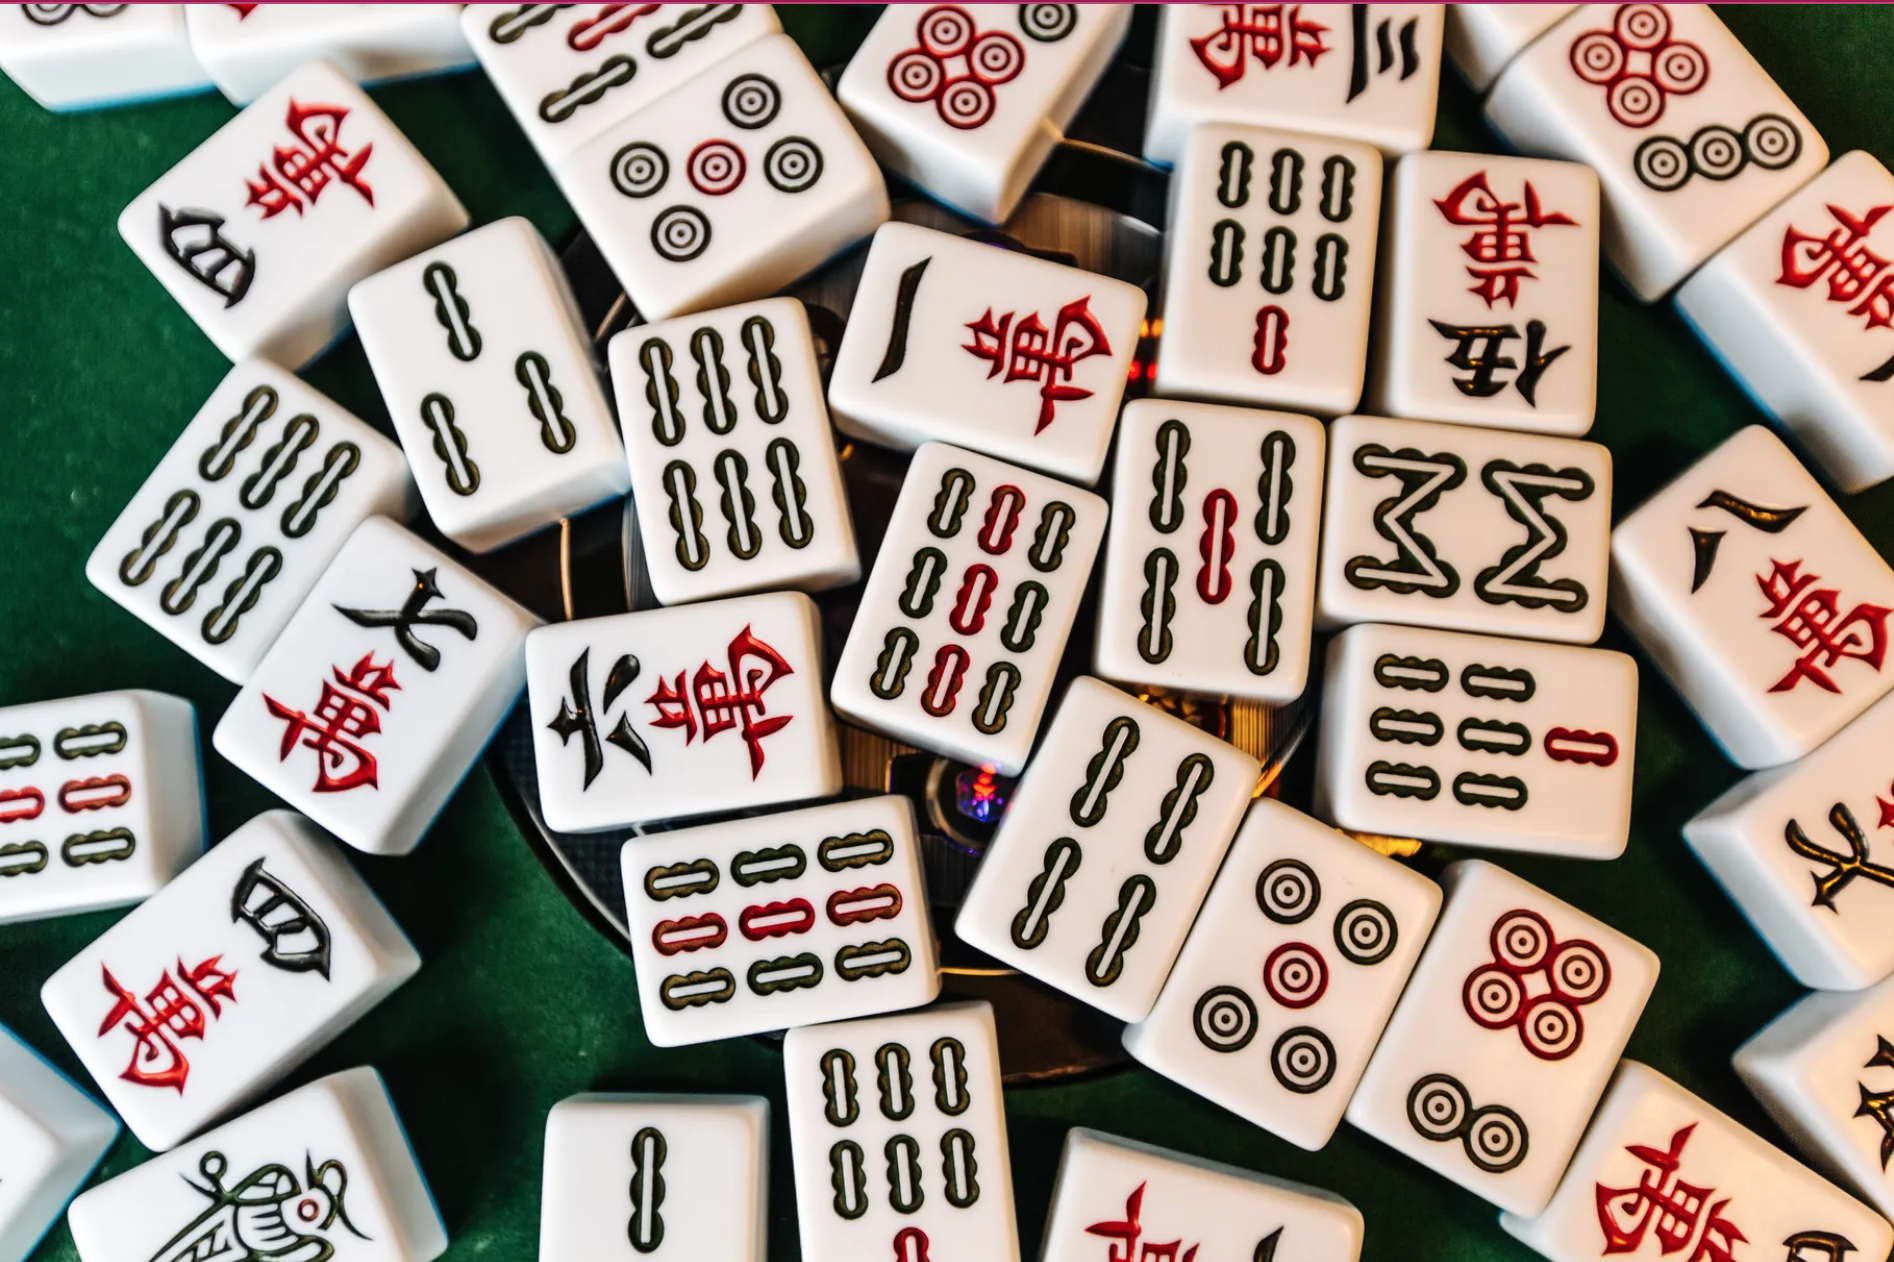 JOGOS DE MAHJONG - jogue Mahjong grátis em !